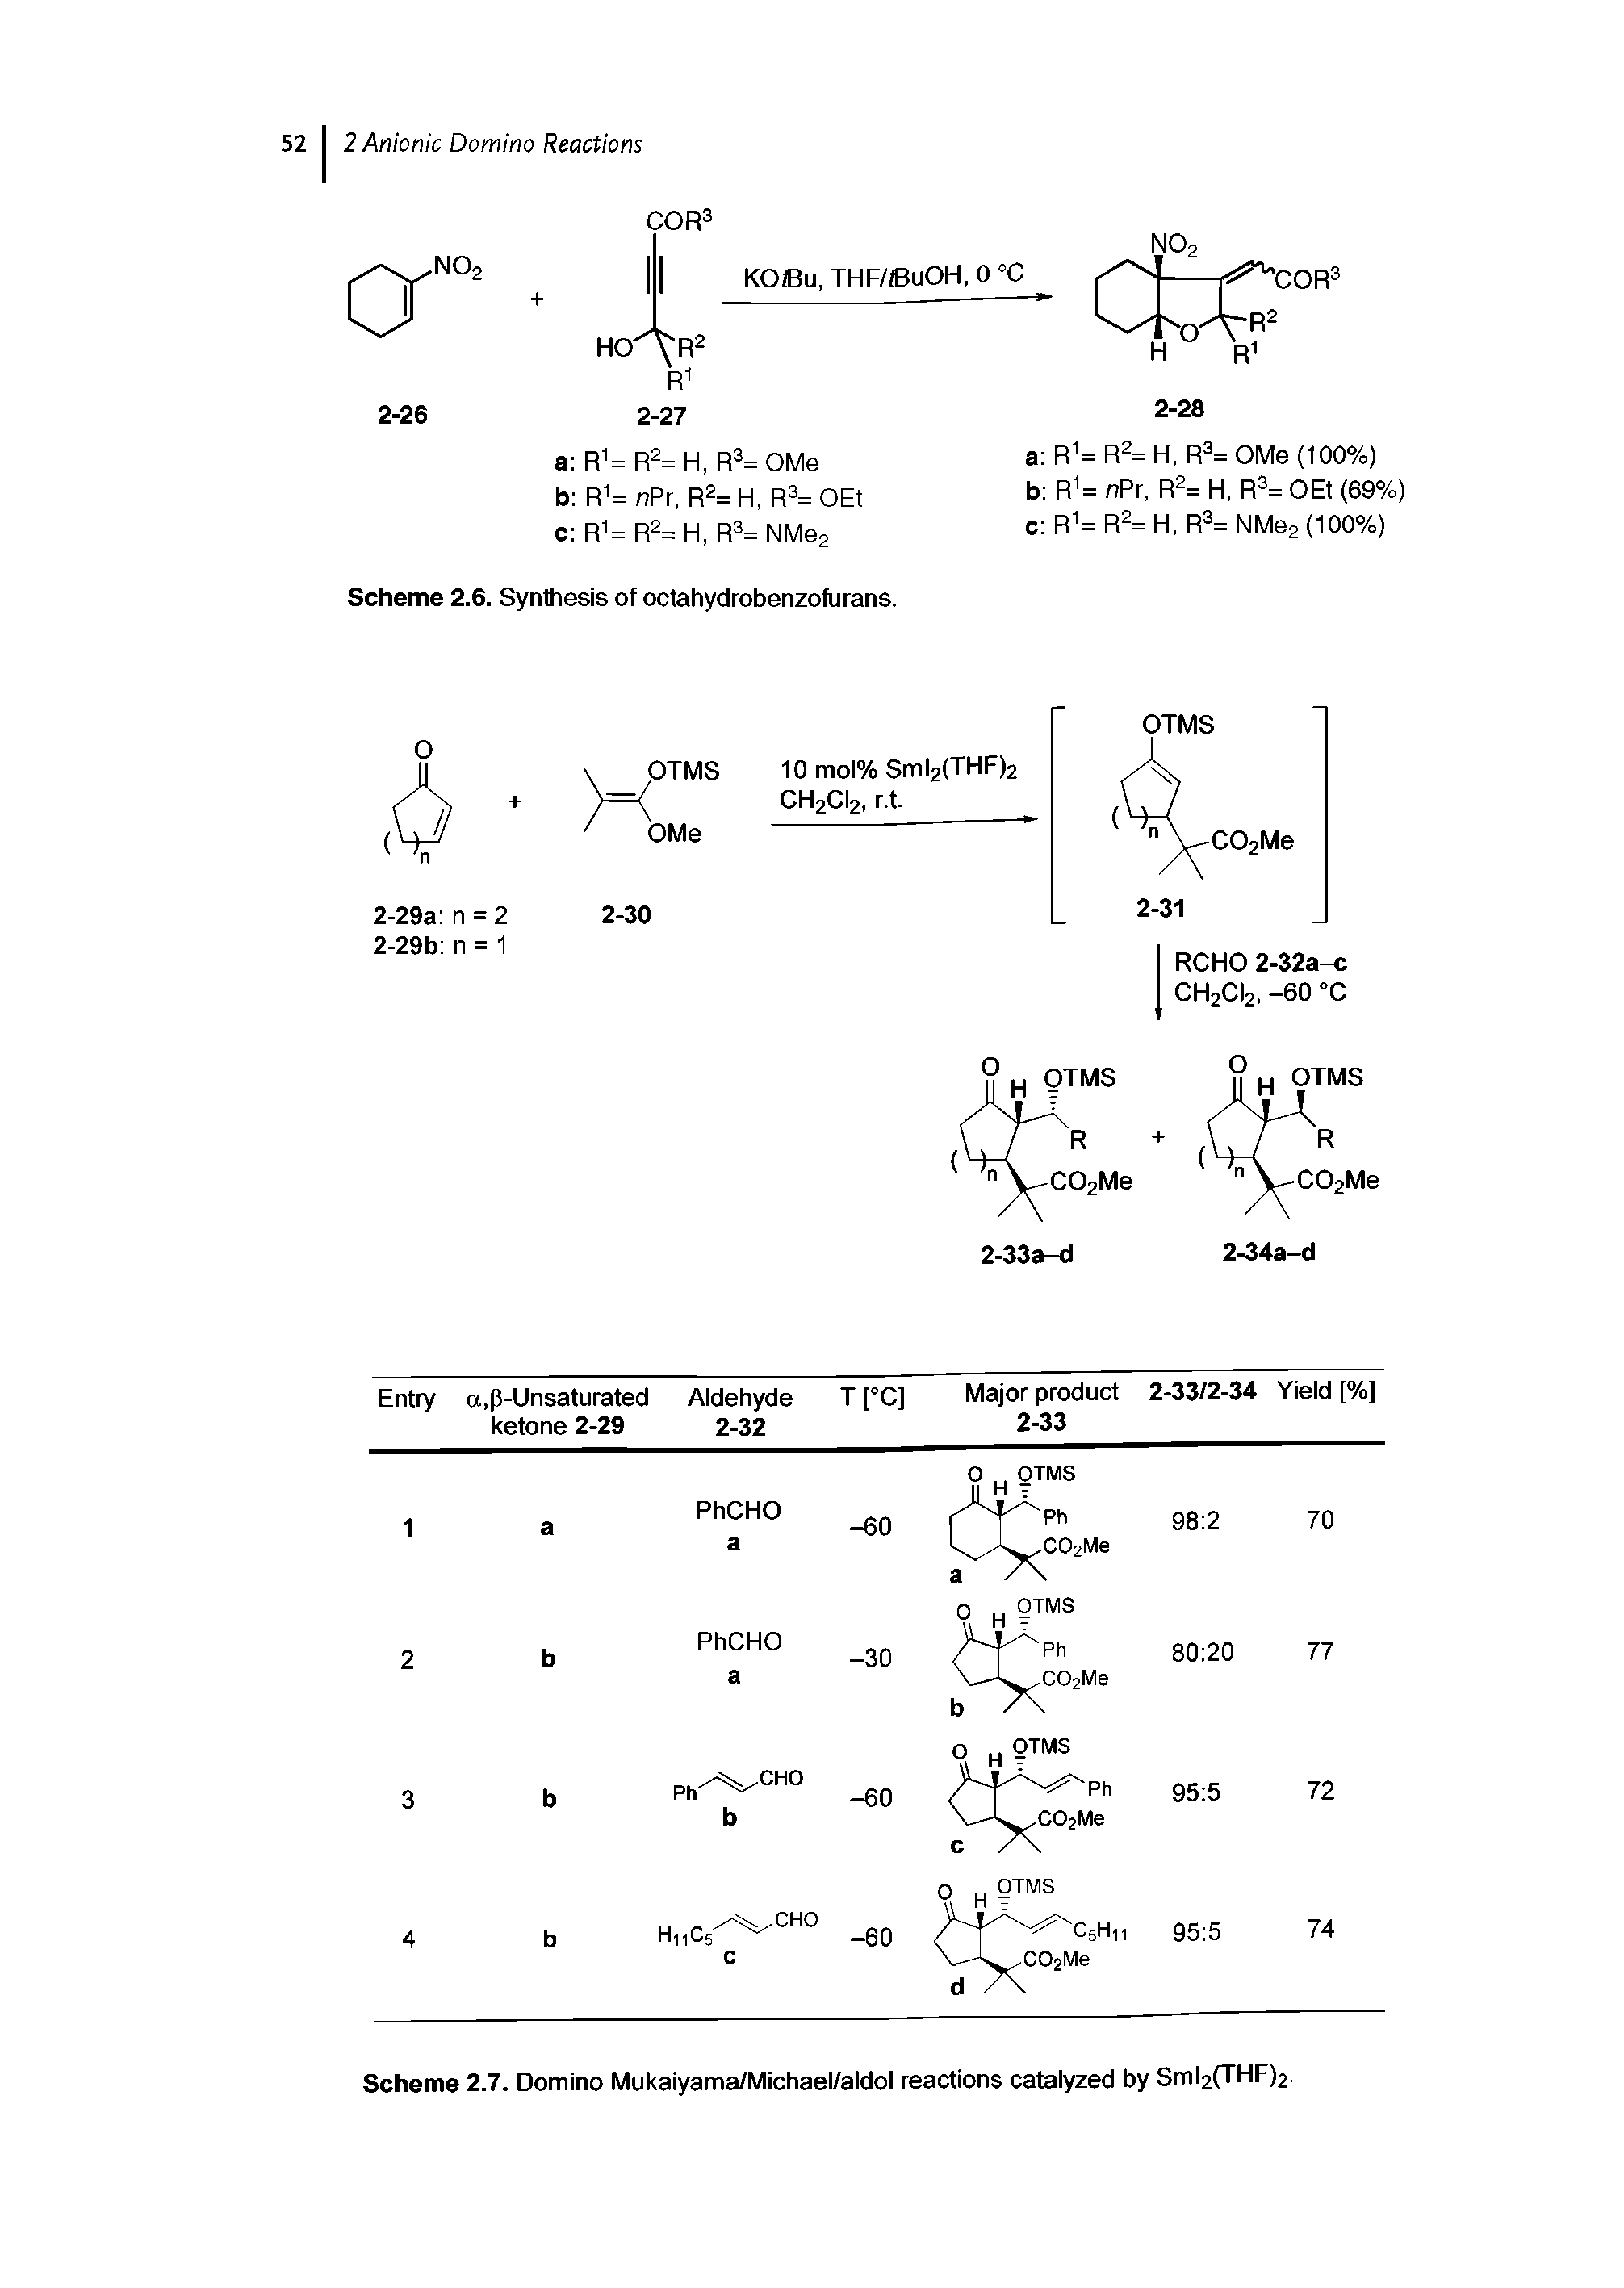 Scheme 2.7. Domino Mukaiyama/Michael/aldol reactions catalyzed by Sml2(THF)2.